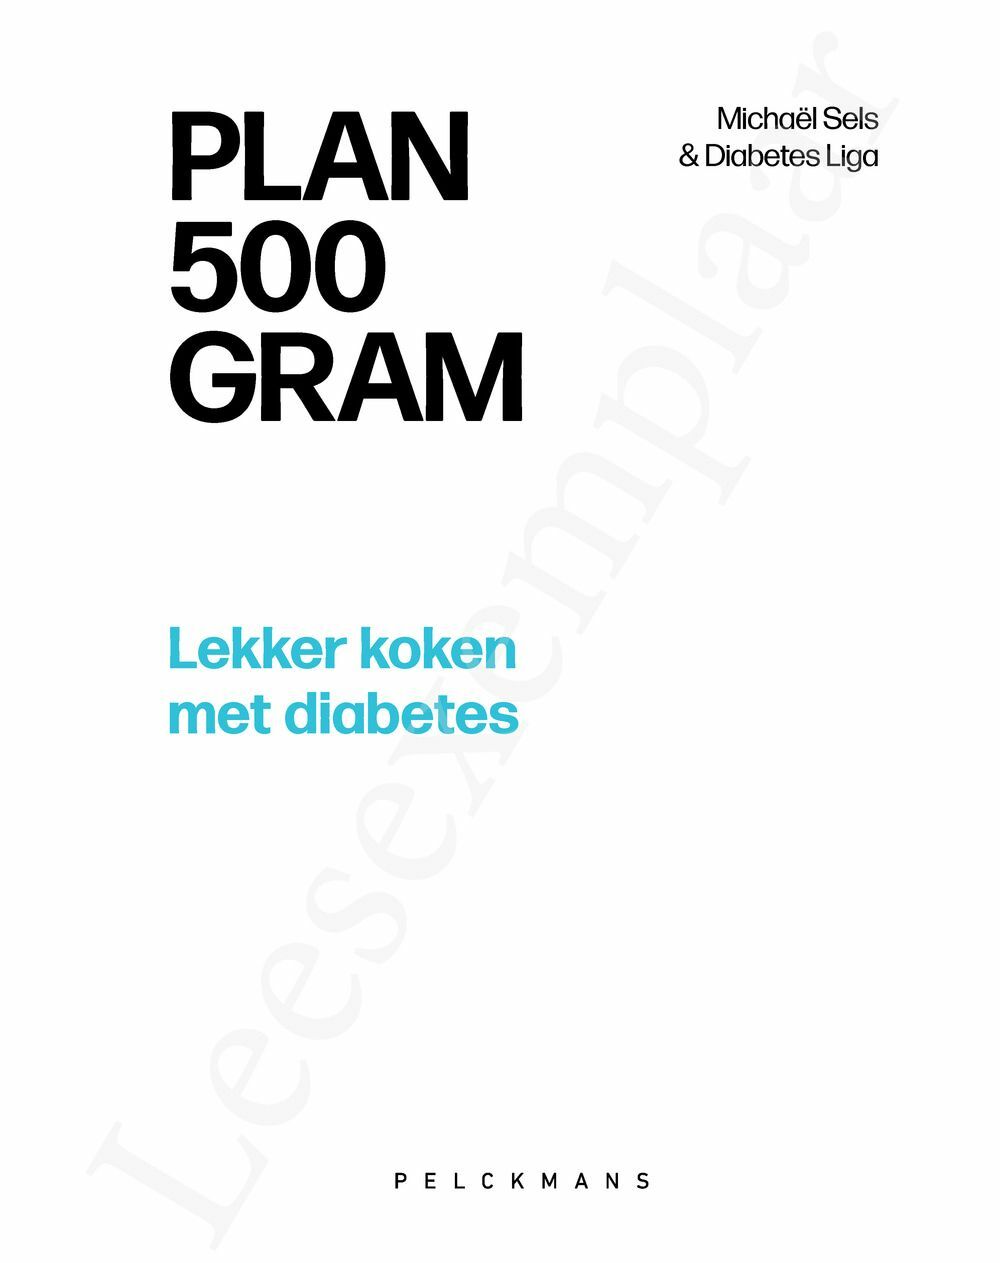 Preview: Plan 500 gram (Diabetes Liga)